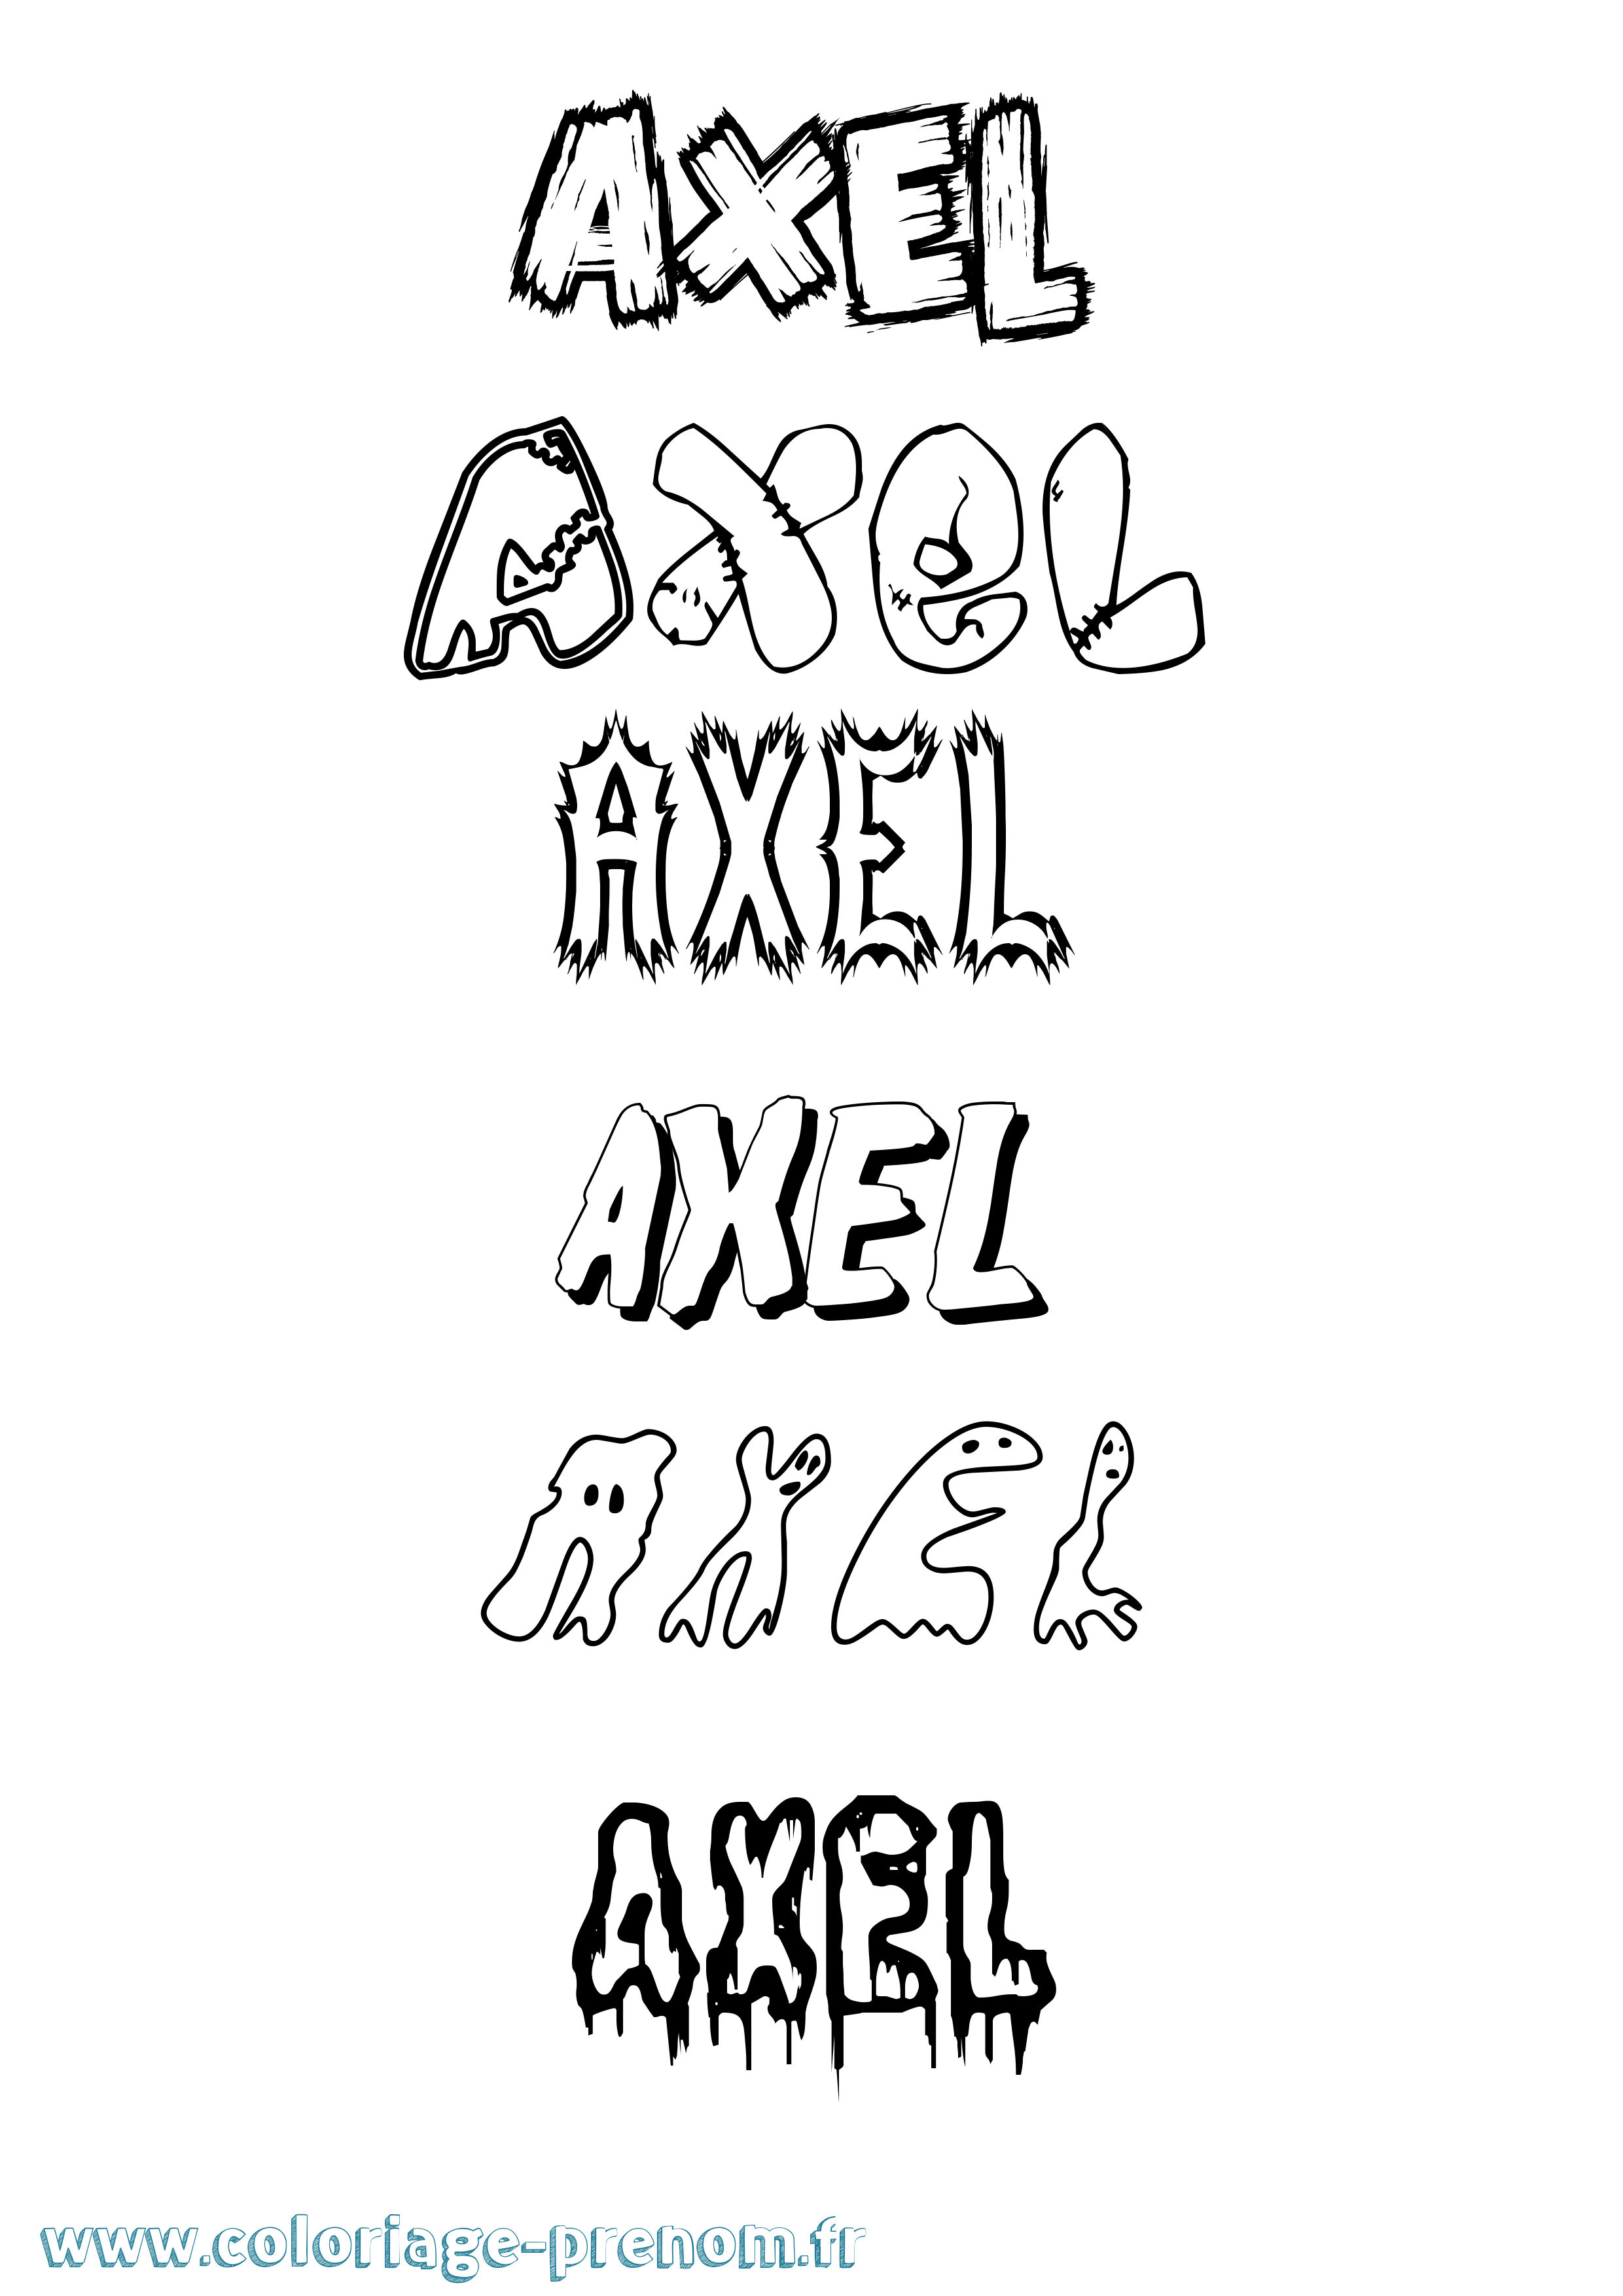 Coloriage prénom Axel Frisson